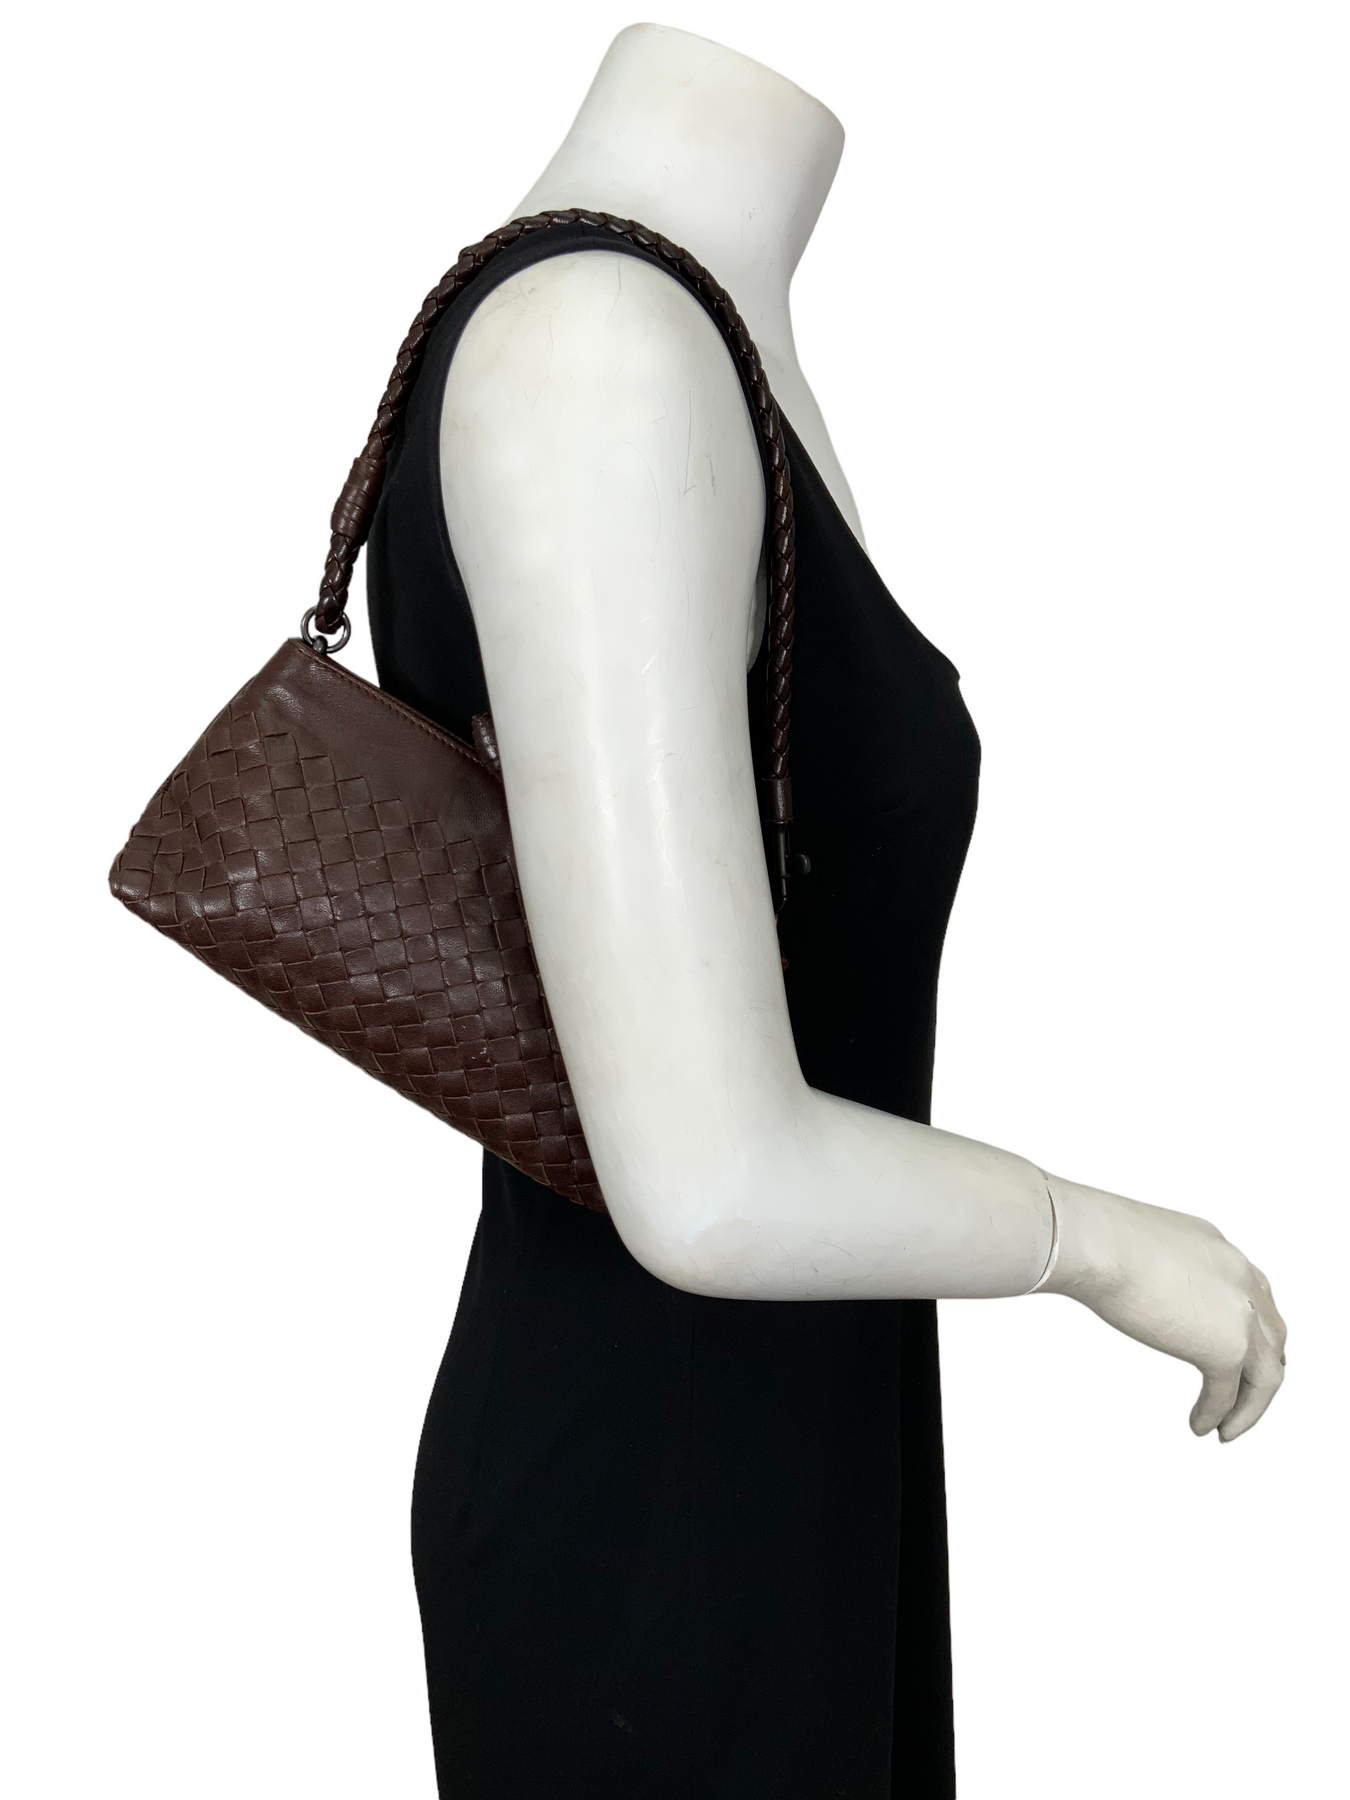 Bottega Veneta Vintage Black Intrecciato Leather Shoulder Bag